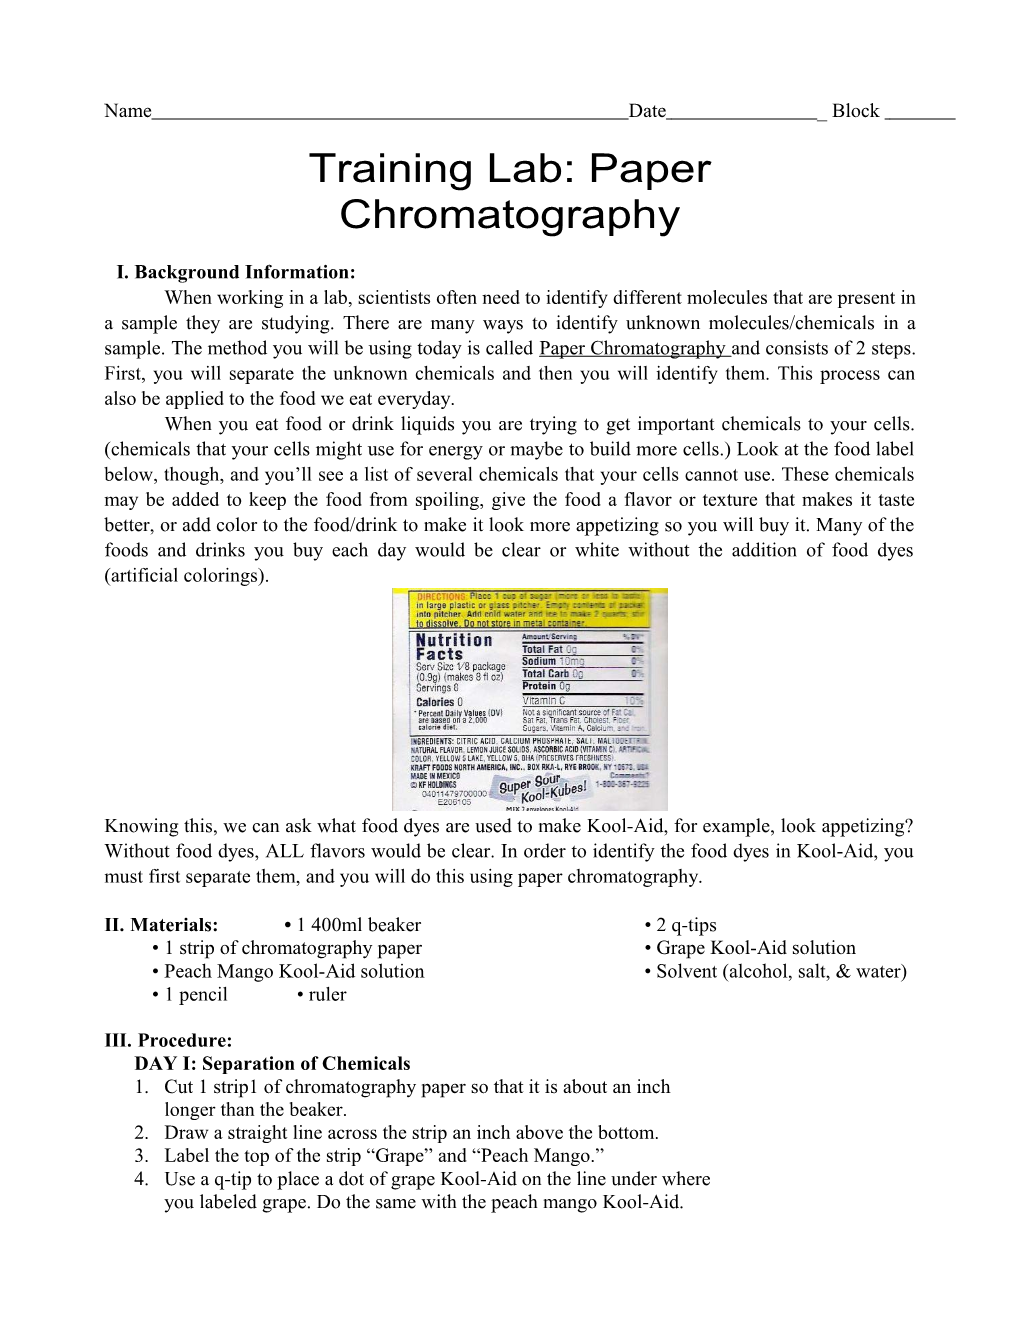 Training Lab: Paper Chromatography